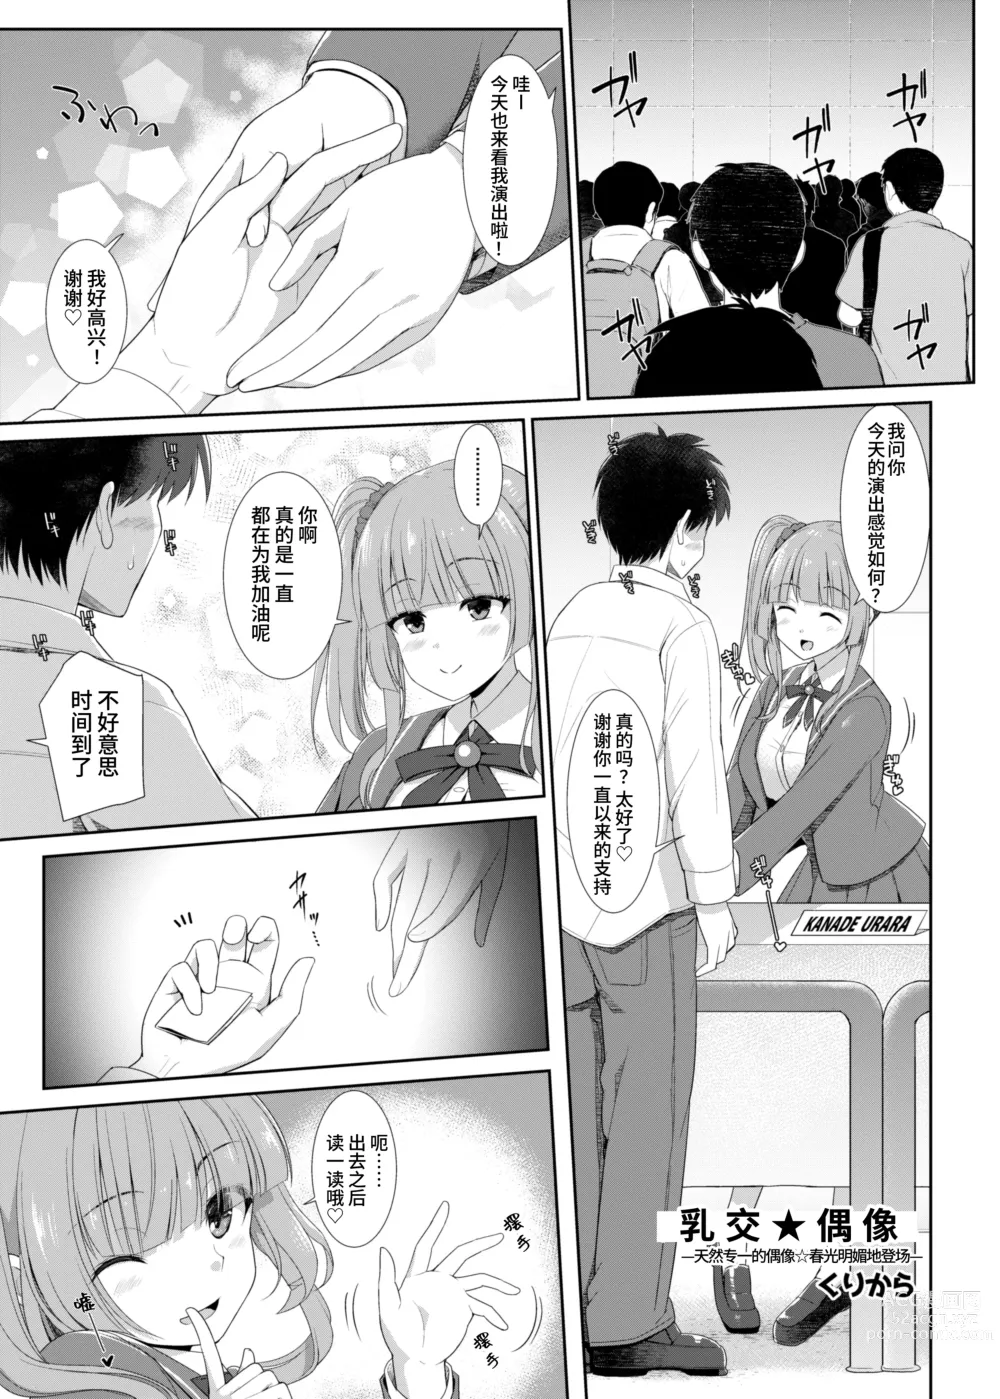 Page 5 of manga 【简体中文版】乳交专业杂志《绝对乳夹射》Vol.4